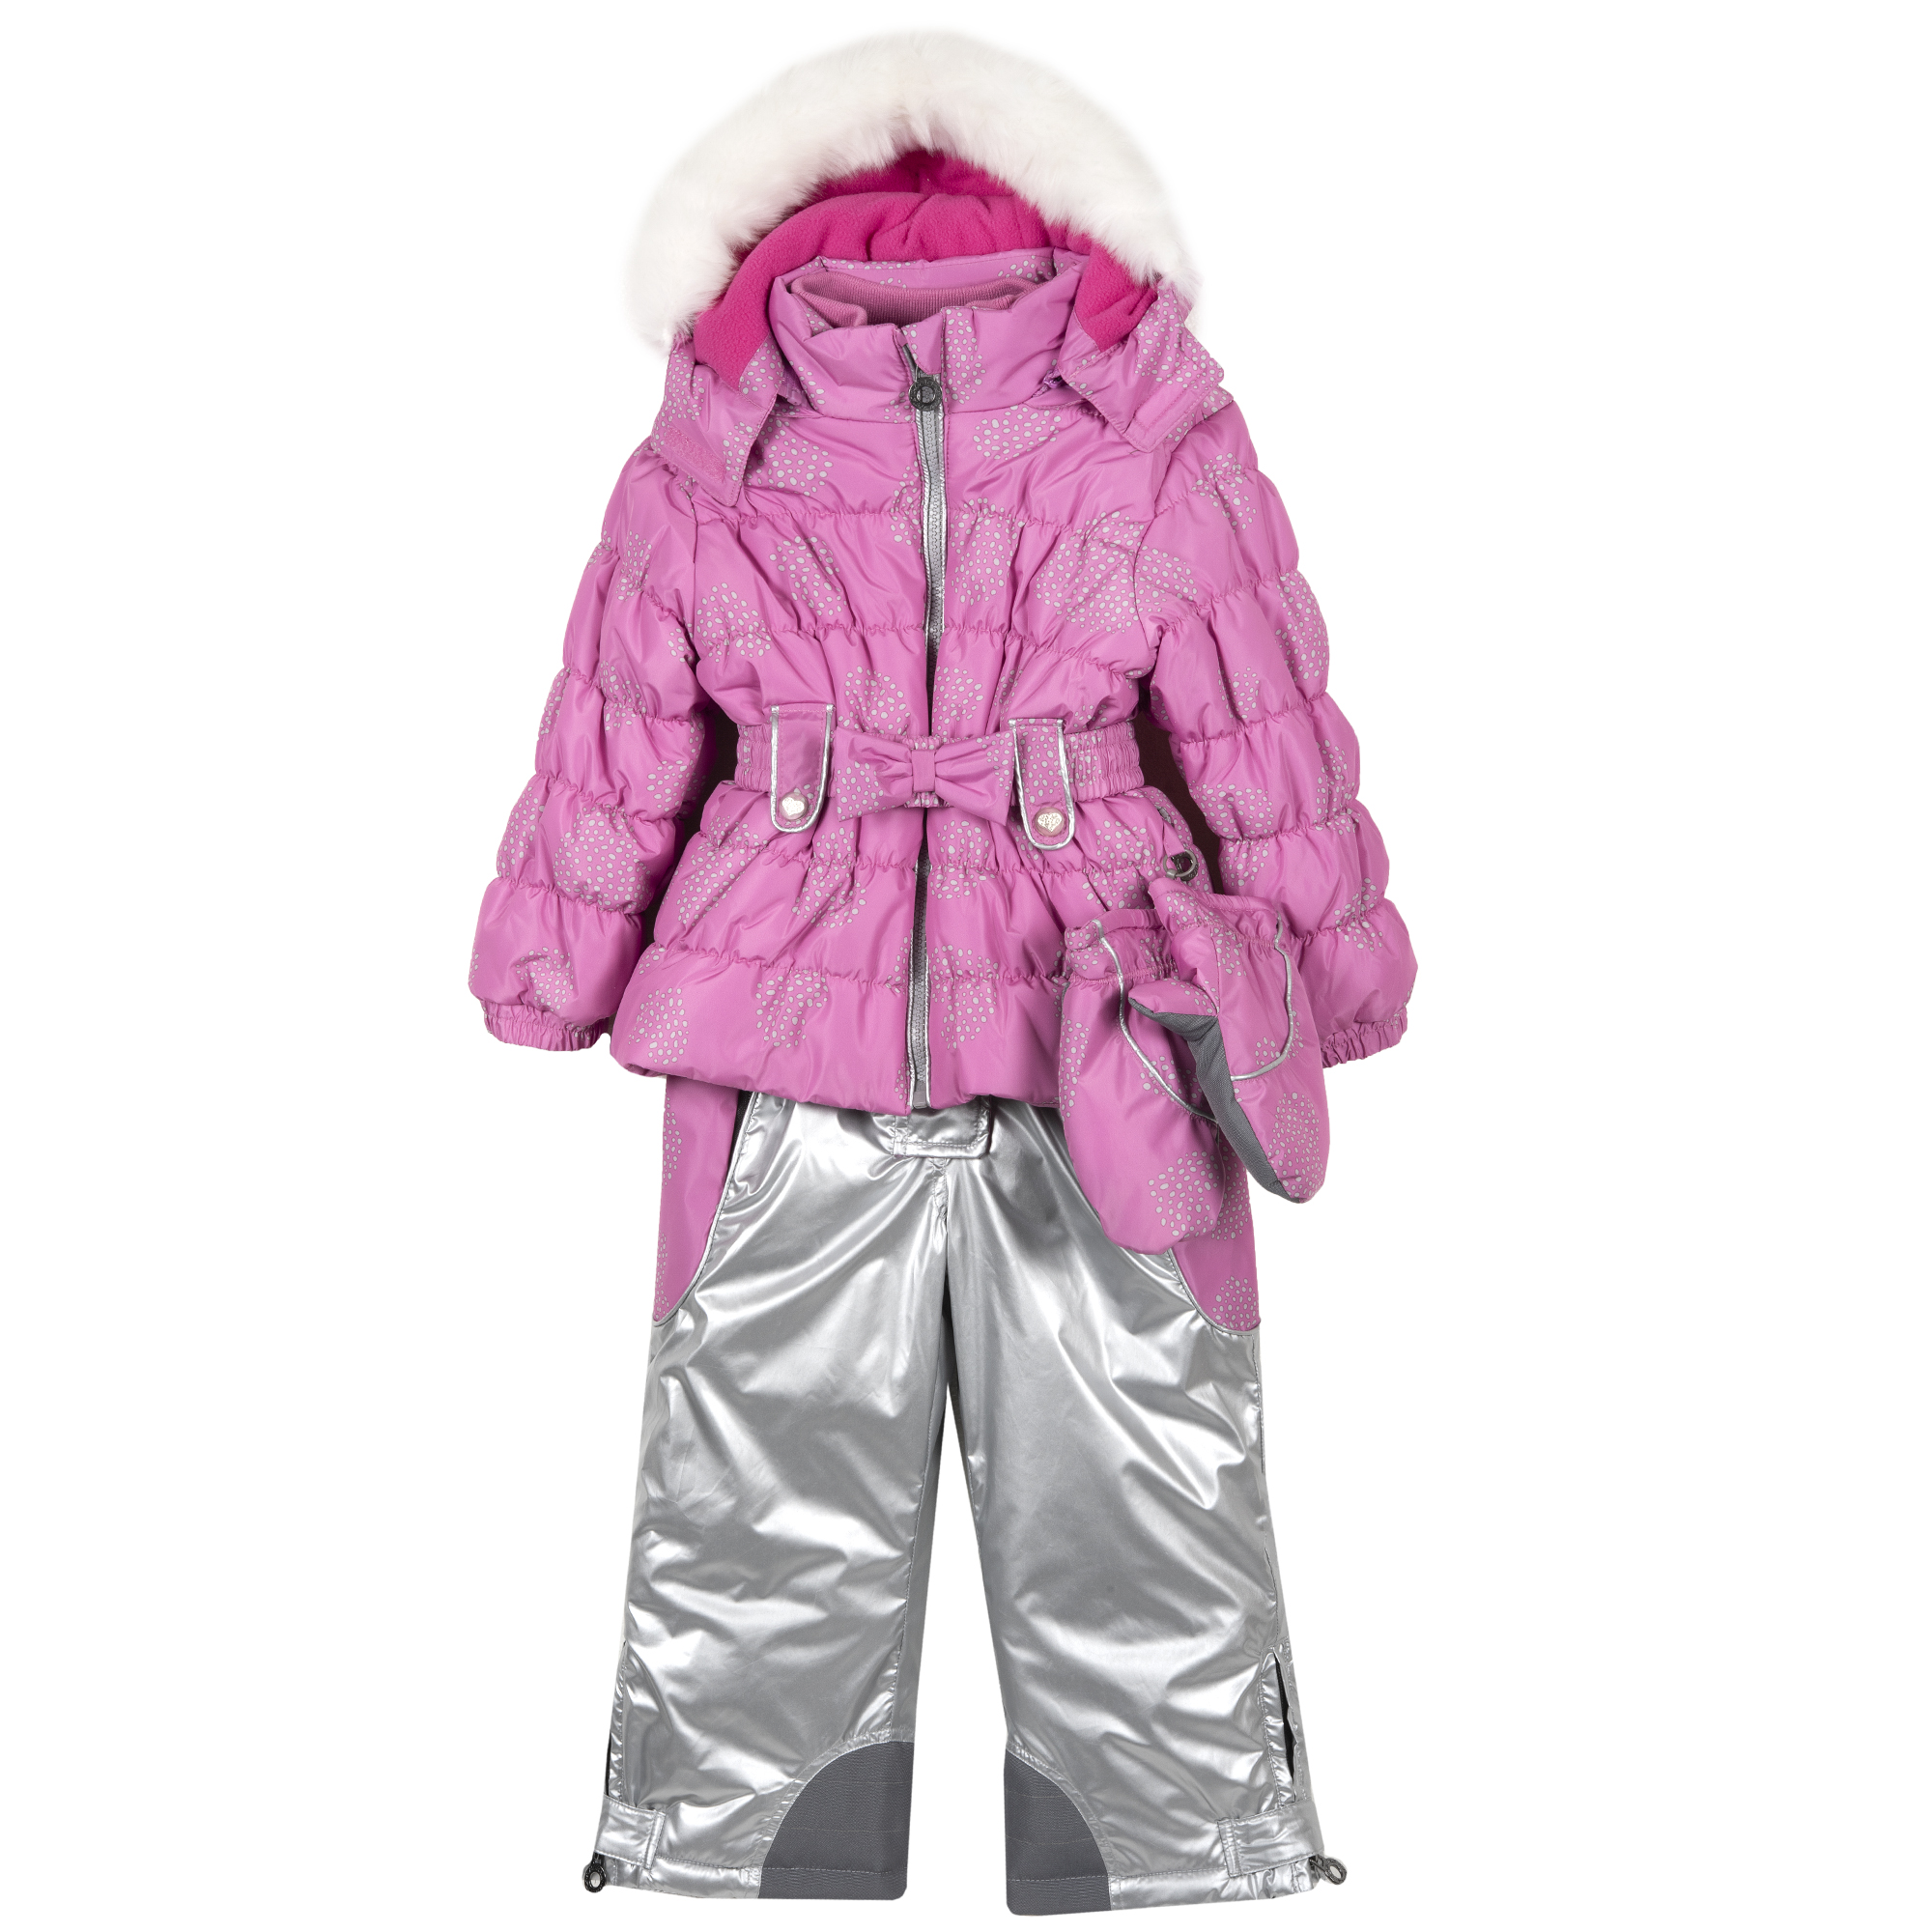 Costum de schi pentru copii Chicco, roz cu albastru, 76581 CHICCO